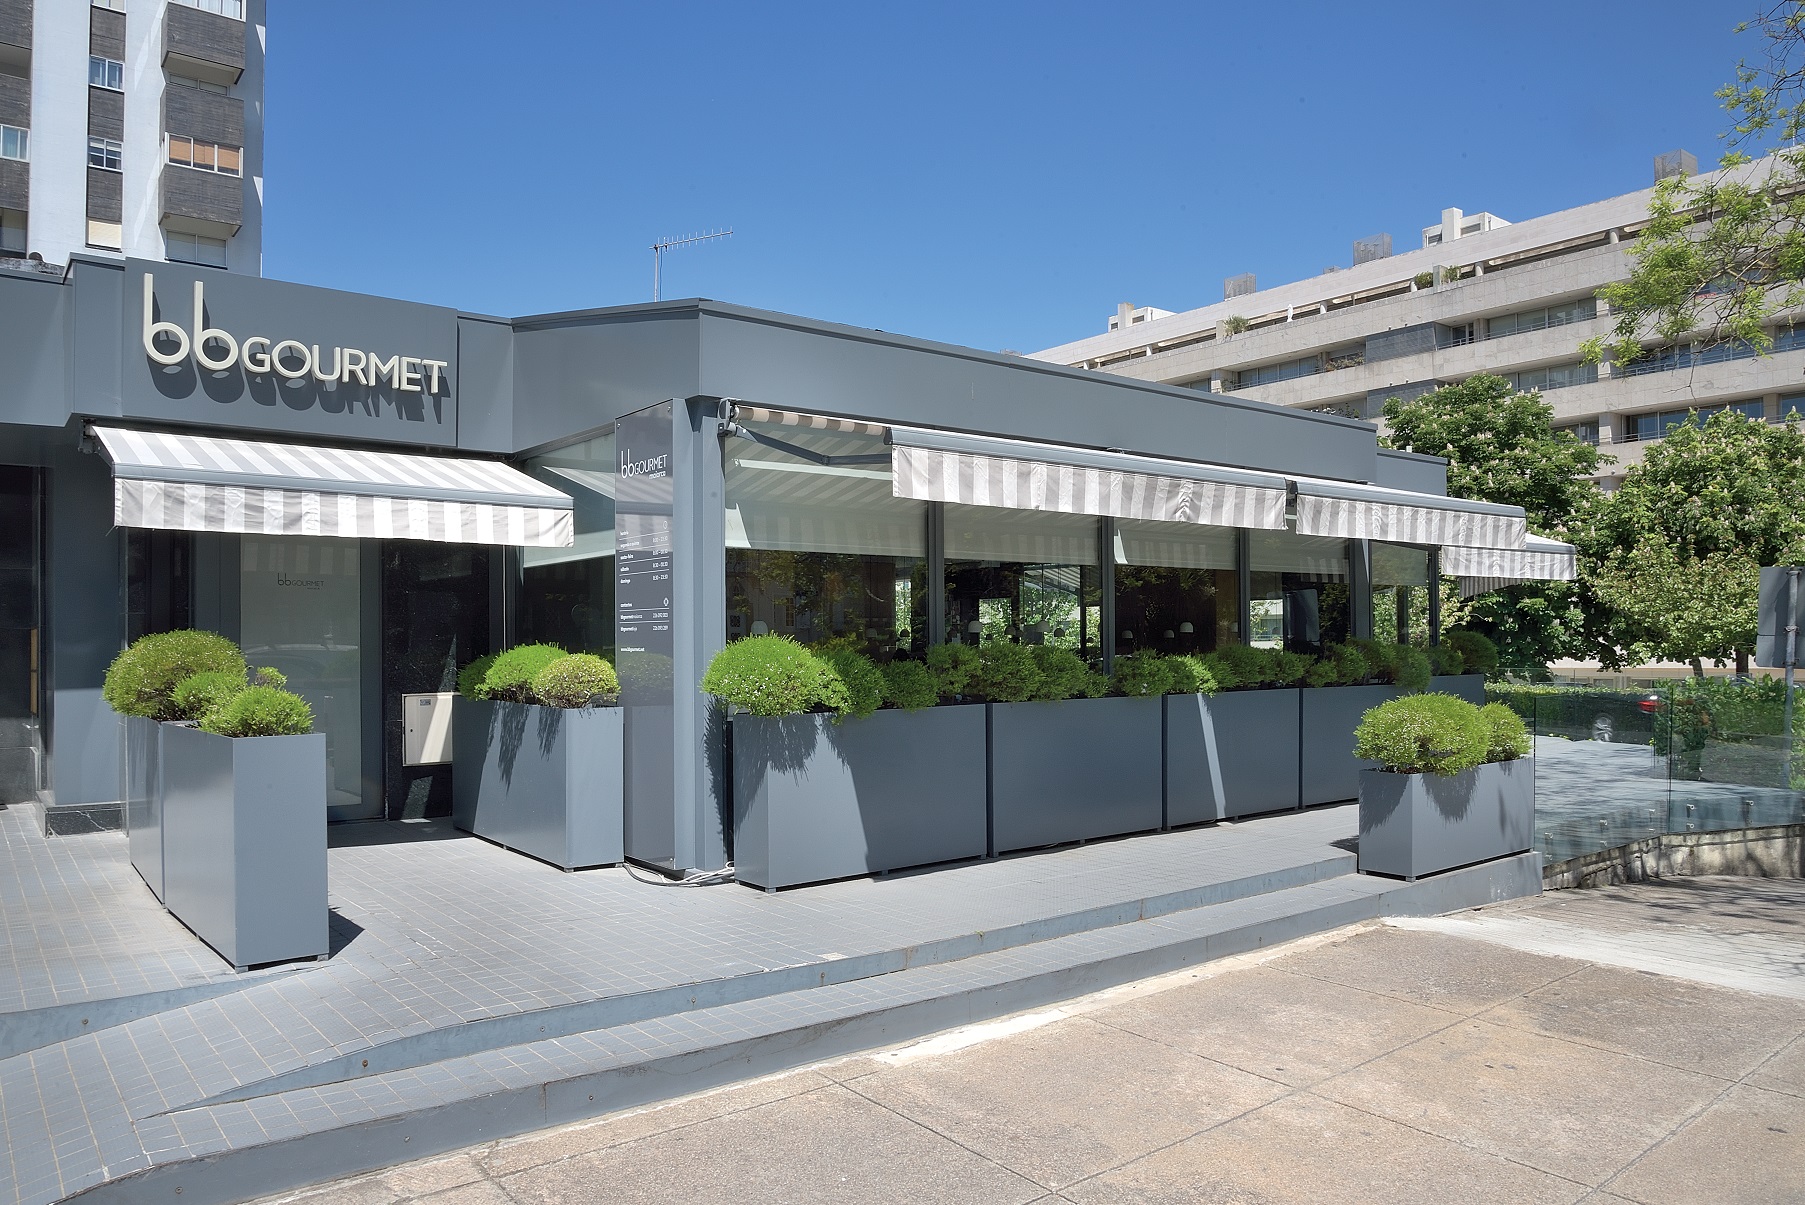 bbGourmet Maiorca - Restaurants